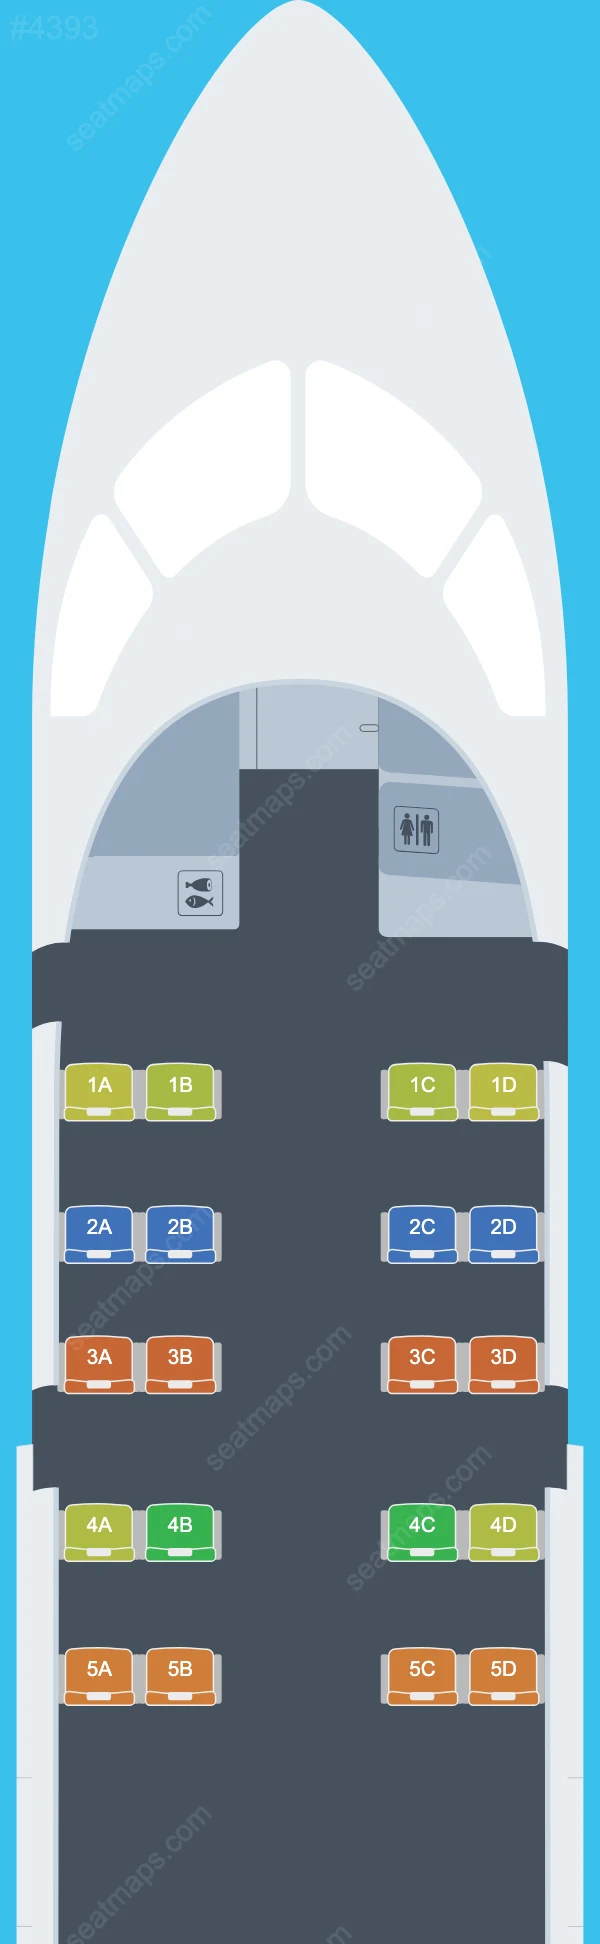 PNG Air Bombardier Q100-Q200 Seat Maps Q100 V.3